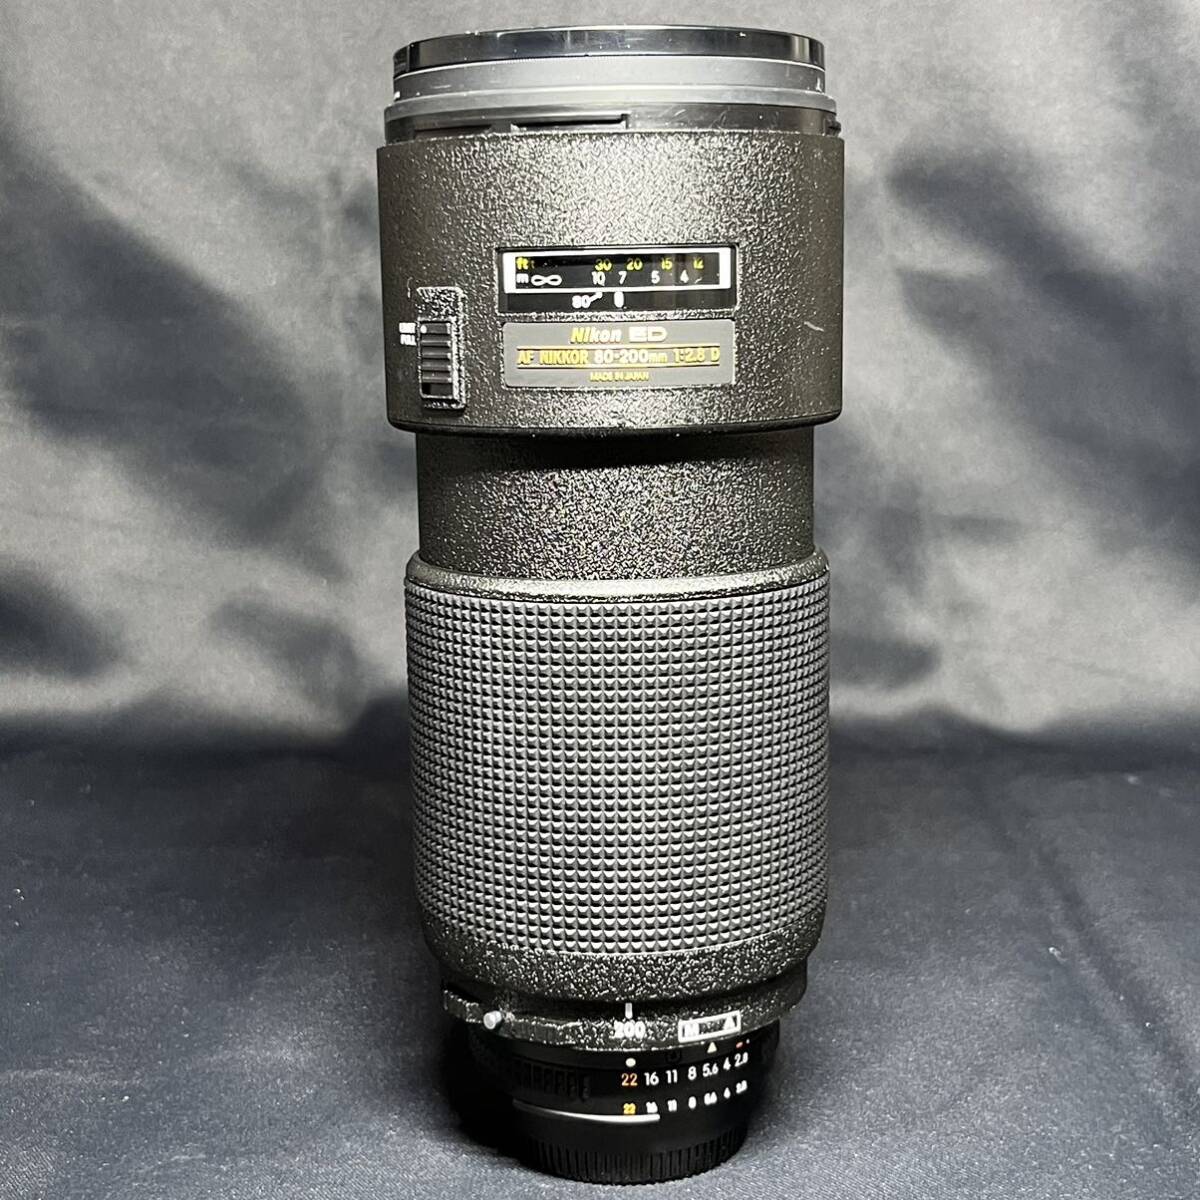 Nikon ニコン ED AF NIKKOR 80-200mm 1:2.8 D カメラレンズ/Nikon HB-7 レンズフード レンズキャップ付き 美品の画像4